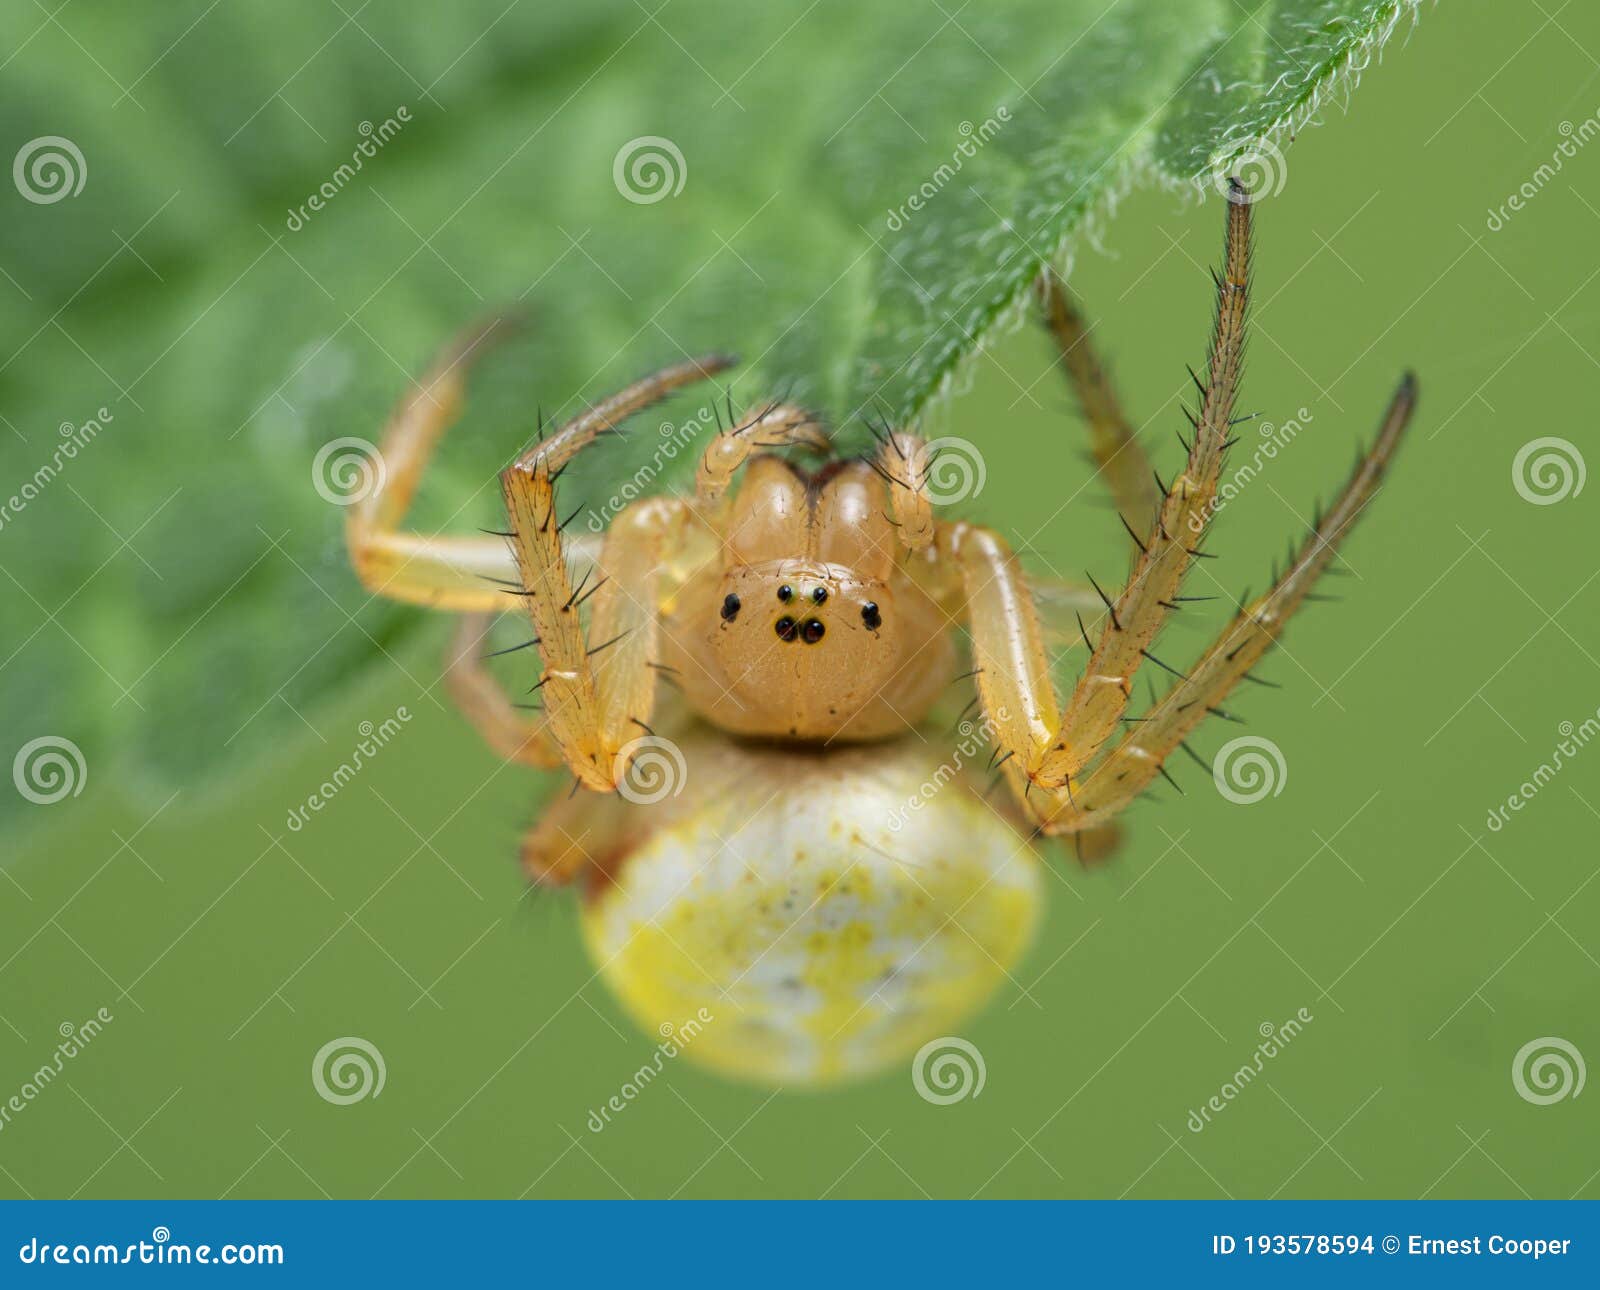 p1010156 pretty sixspotted orbweaver spider, araniella displicata, under a leaf, deas island, bc cecp 2020